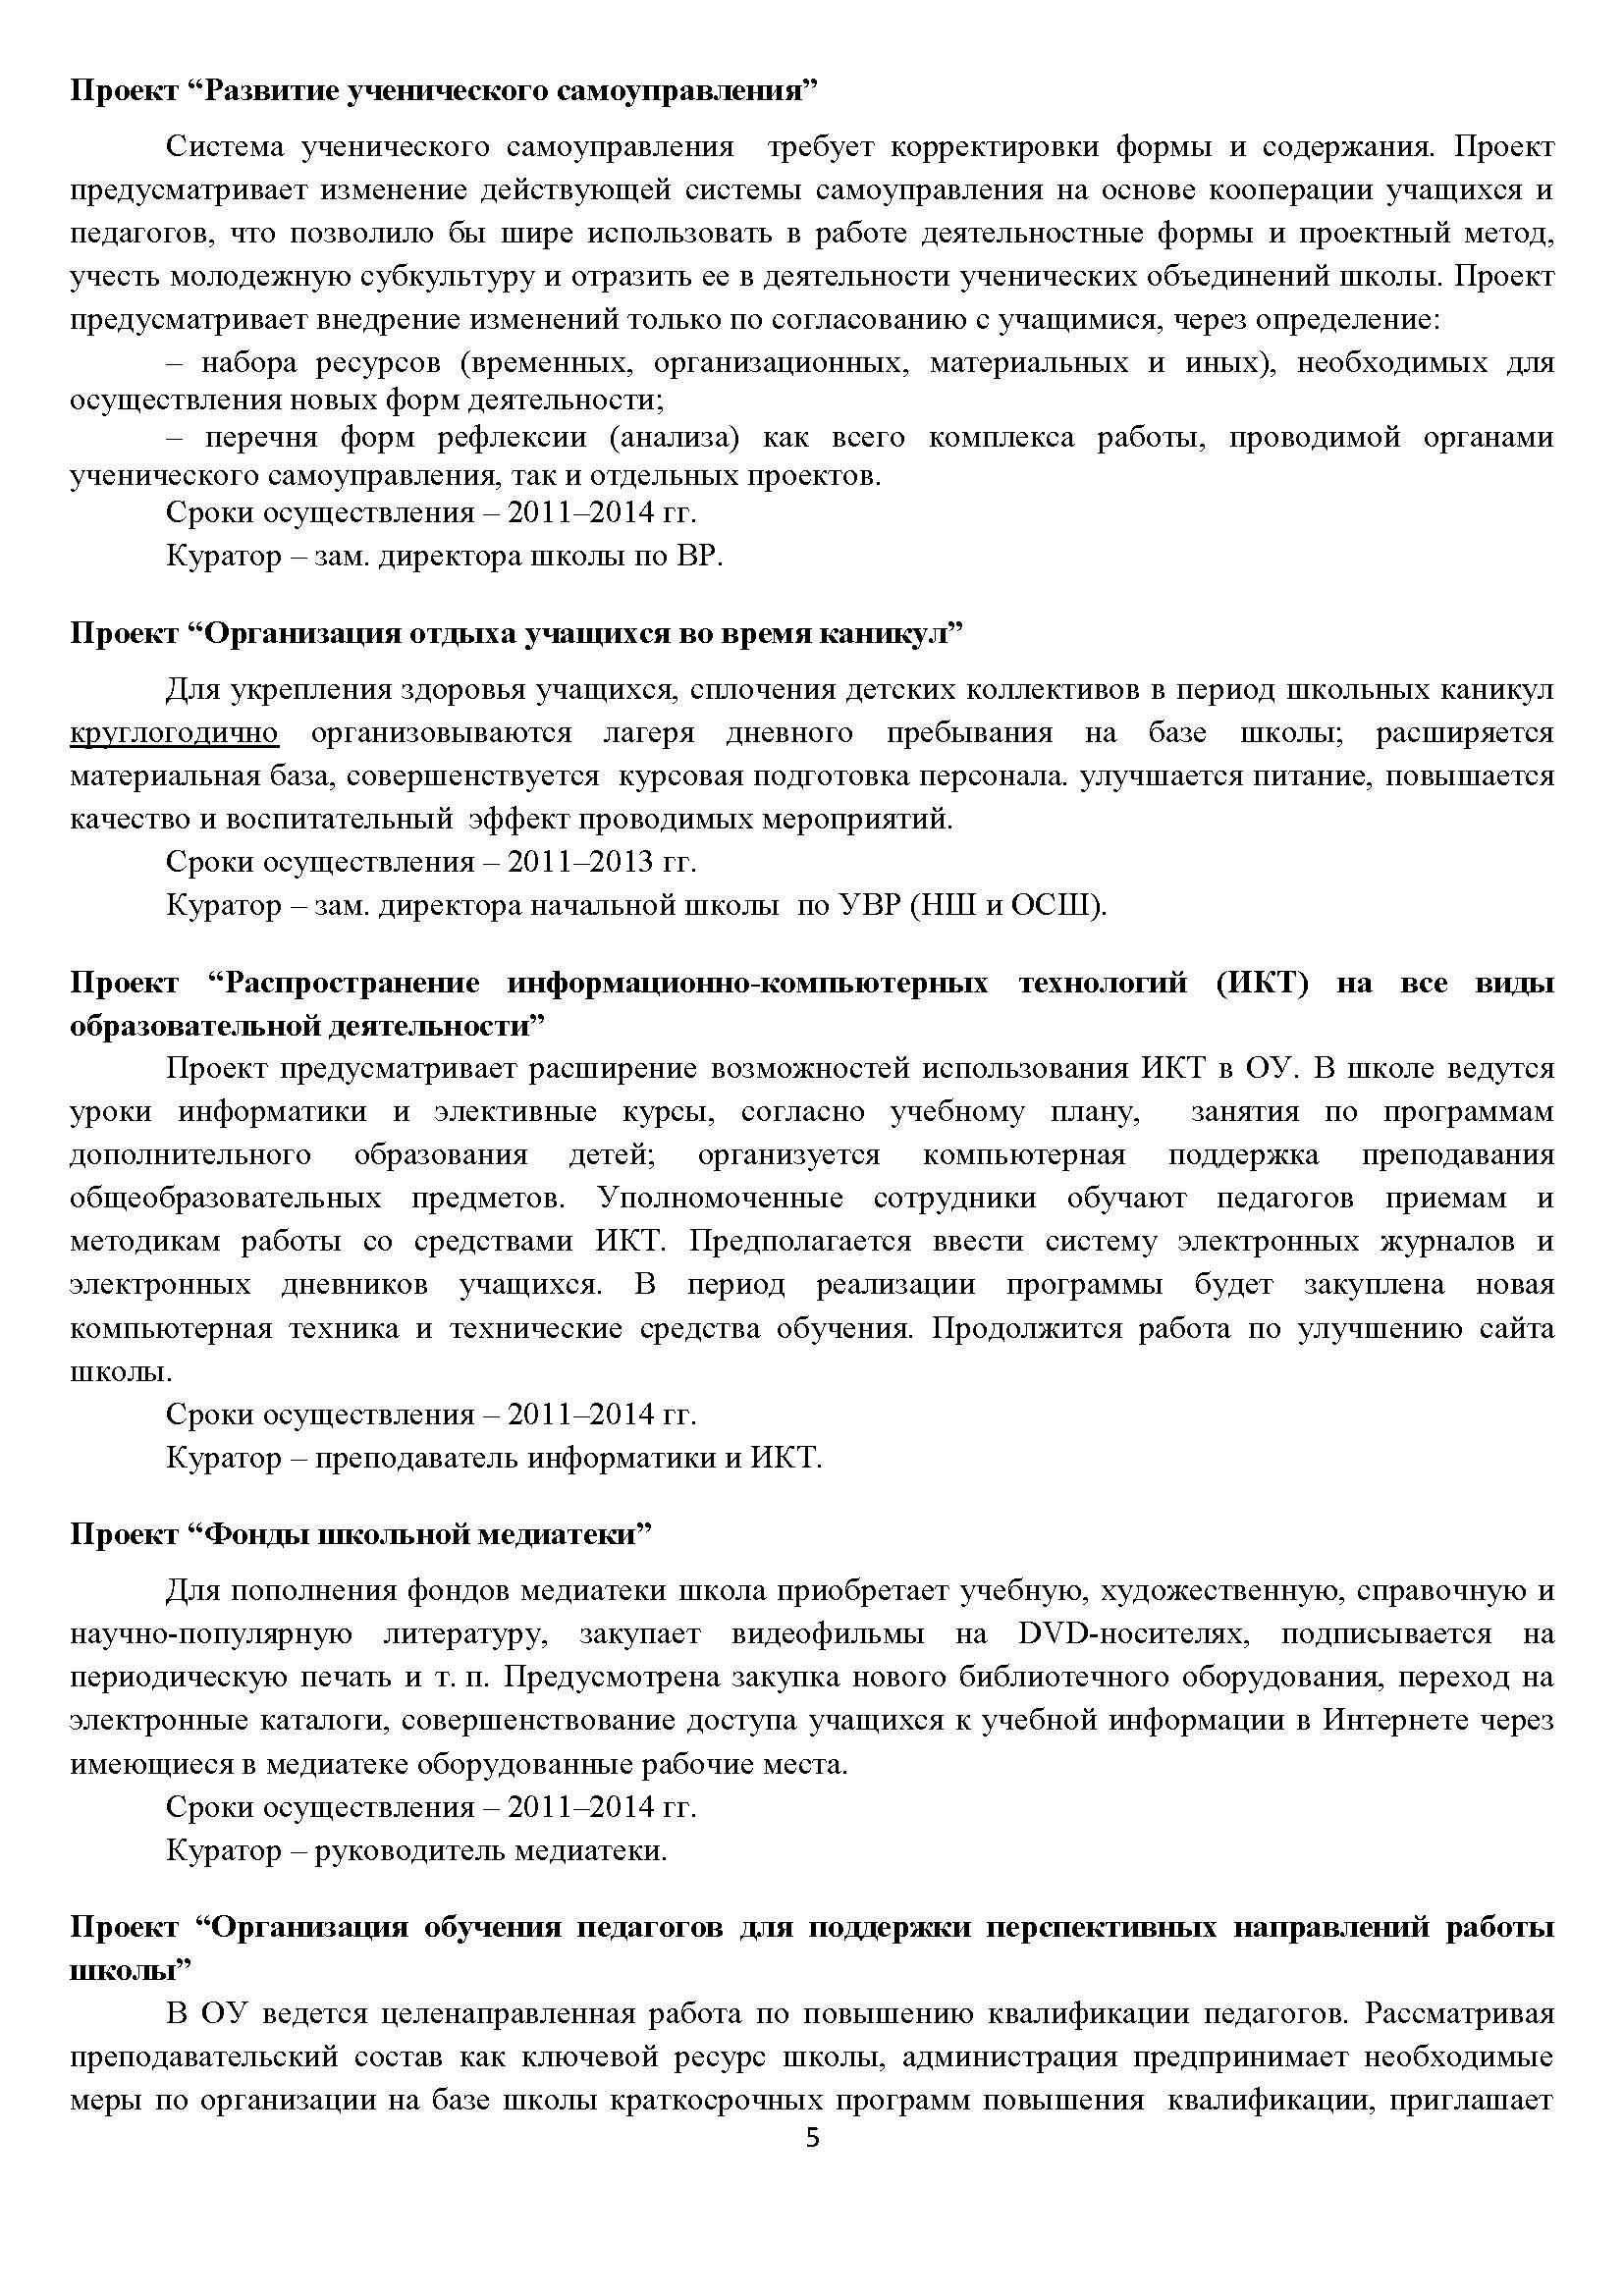 Программа развития школы 2011-2016 гг. Стр.5